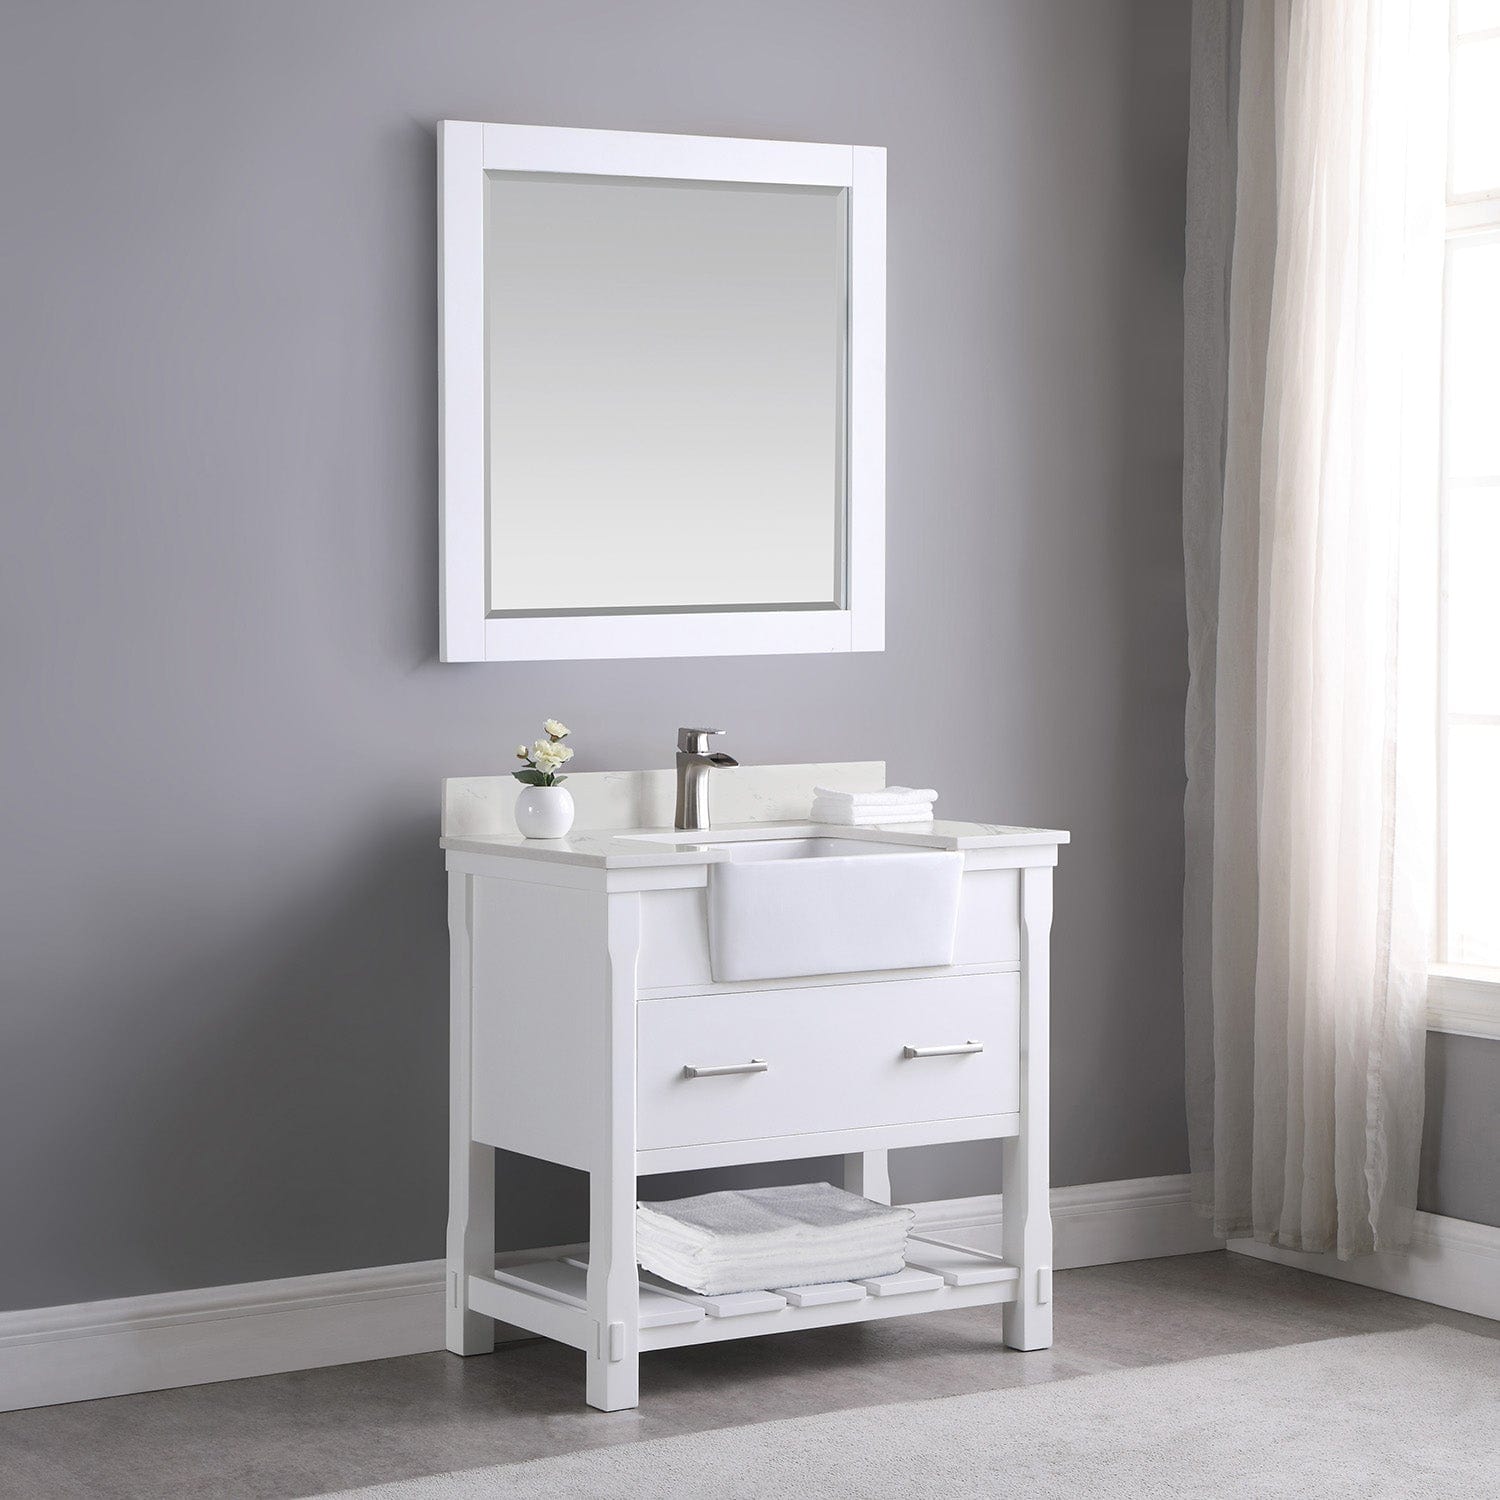 Altair Georgia 36" Single Bathroom Vanity Set in White and Composite Carrara White Stone Top with White Farmhouse Basin with Mirror 537036-WH-AW - Molaix631112970570Vanity537036-WH-AW